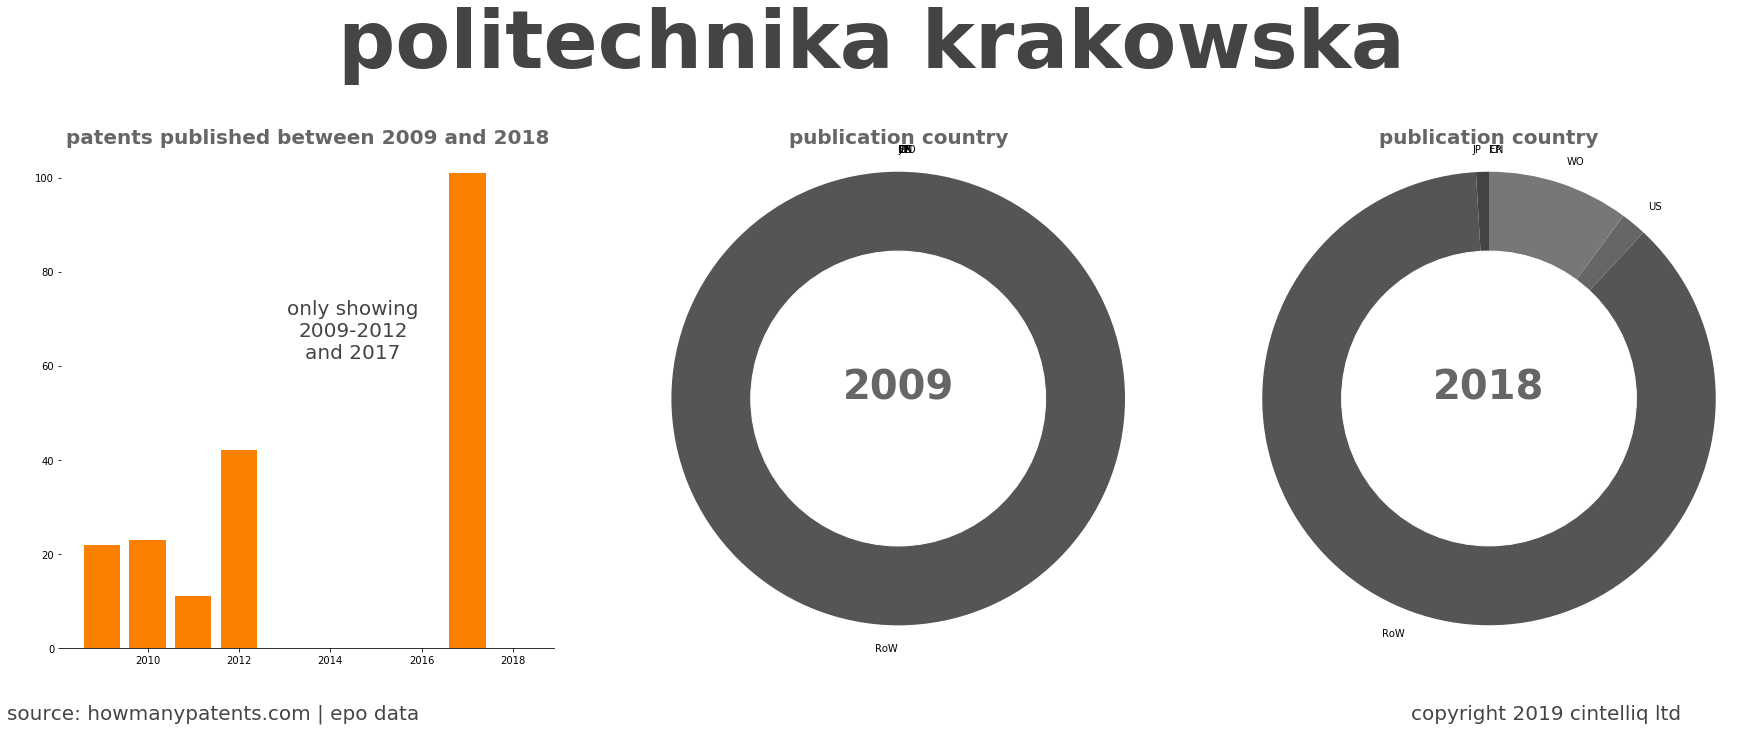 summary of patents for Politechnika Krakowska